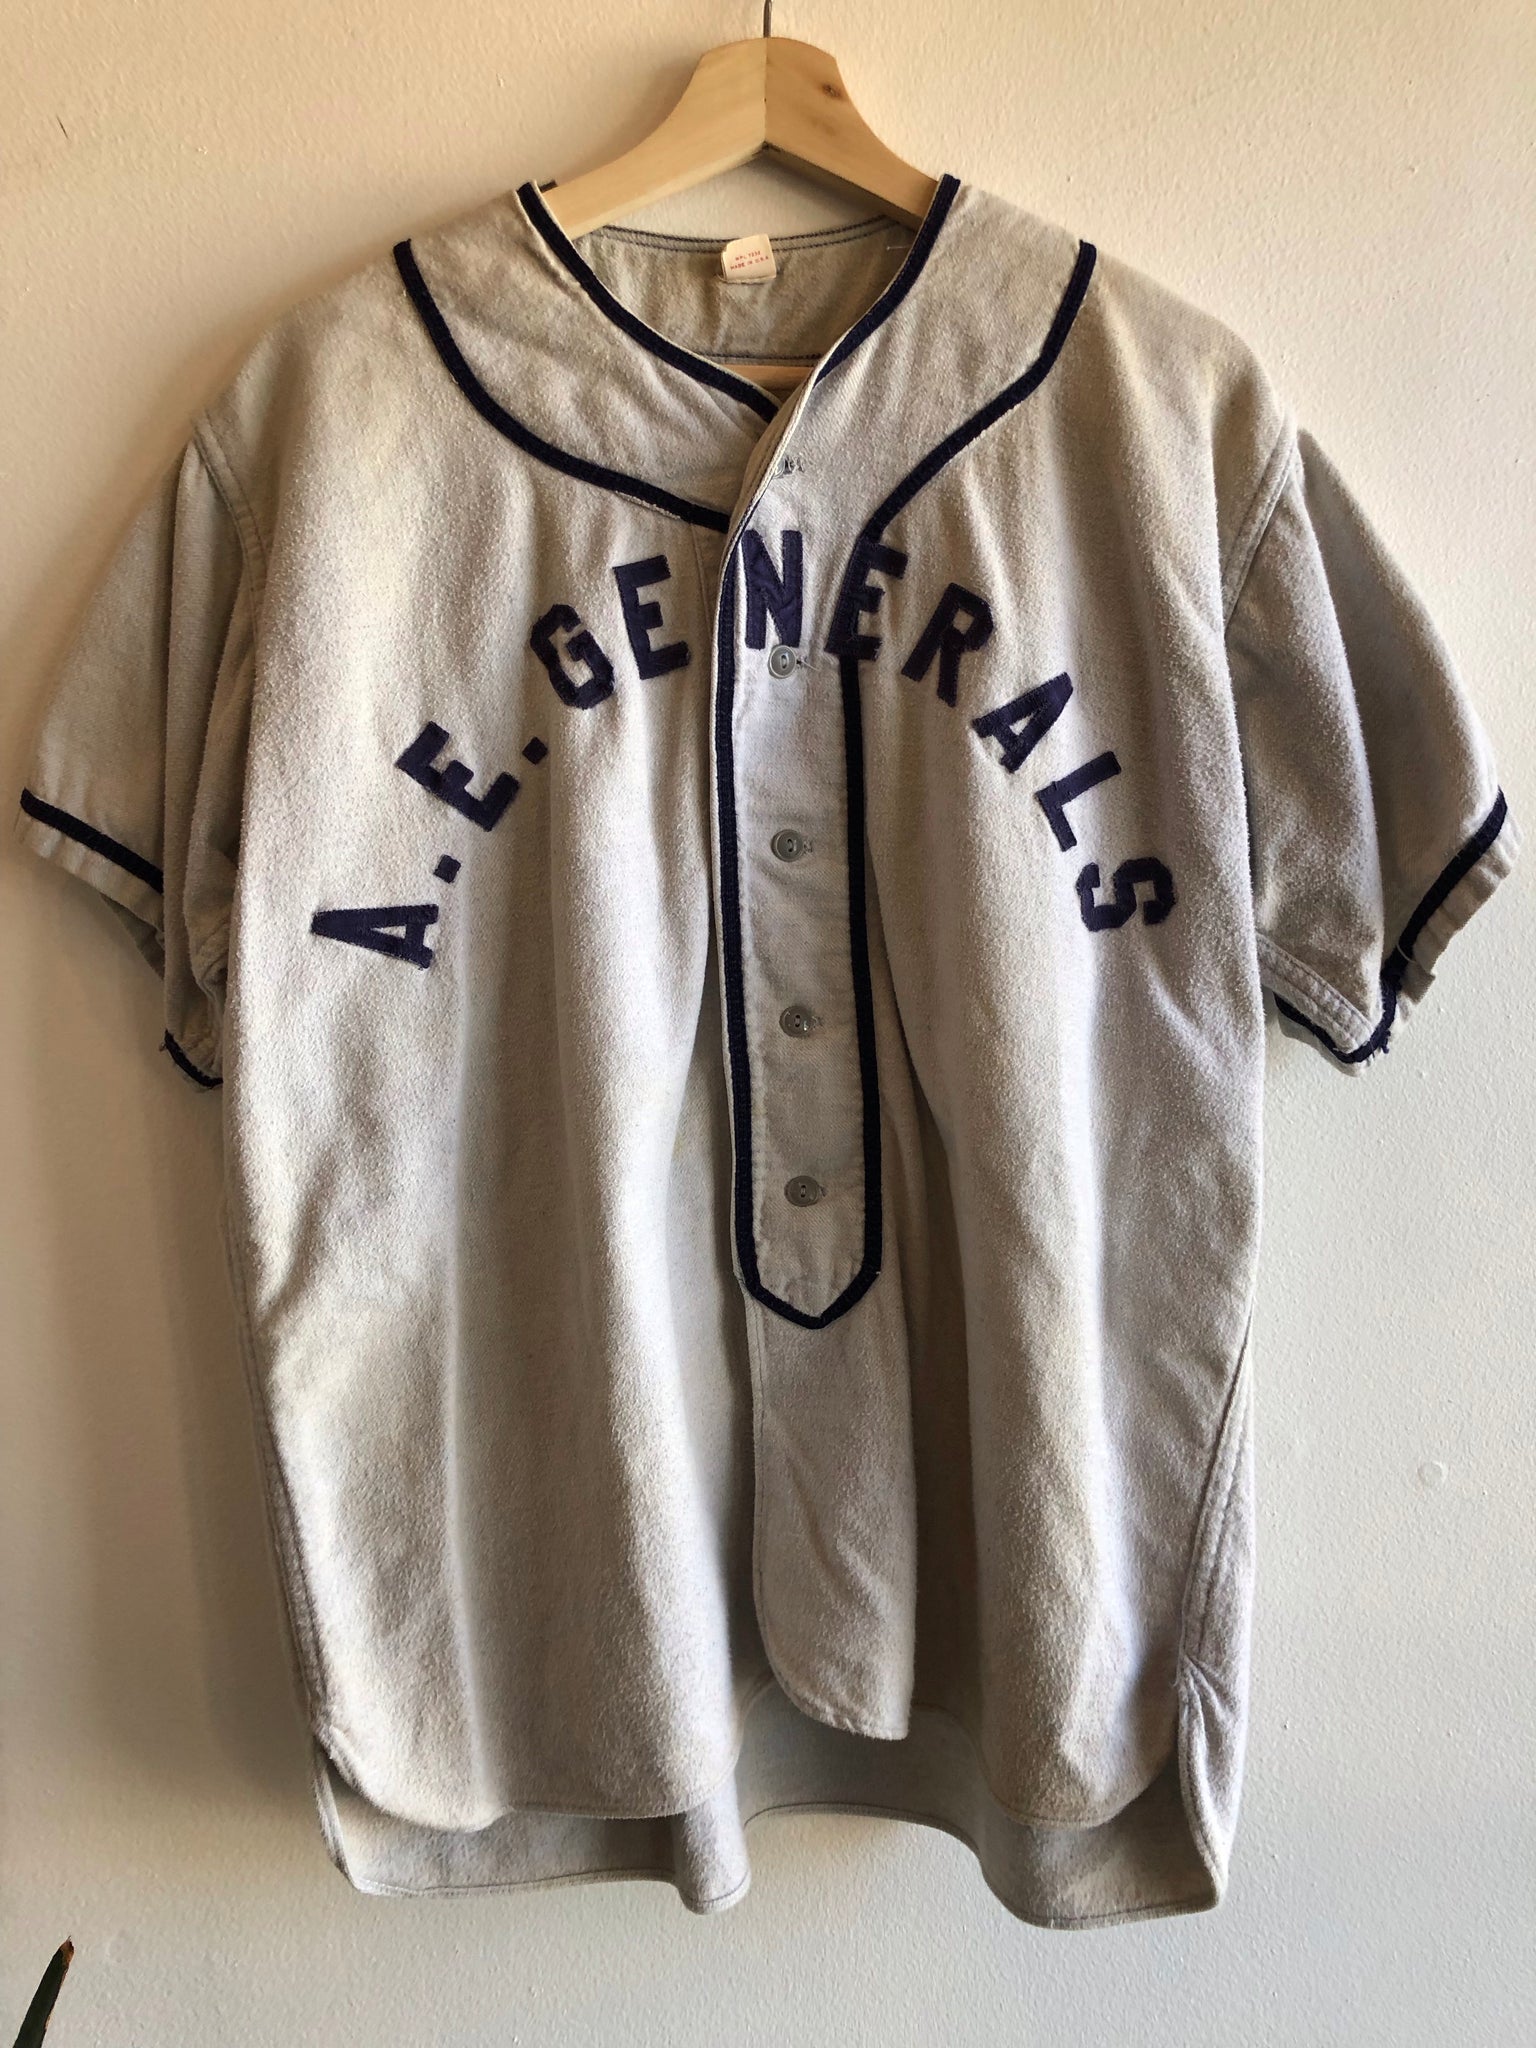 Vintage Baseball Jerseys